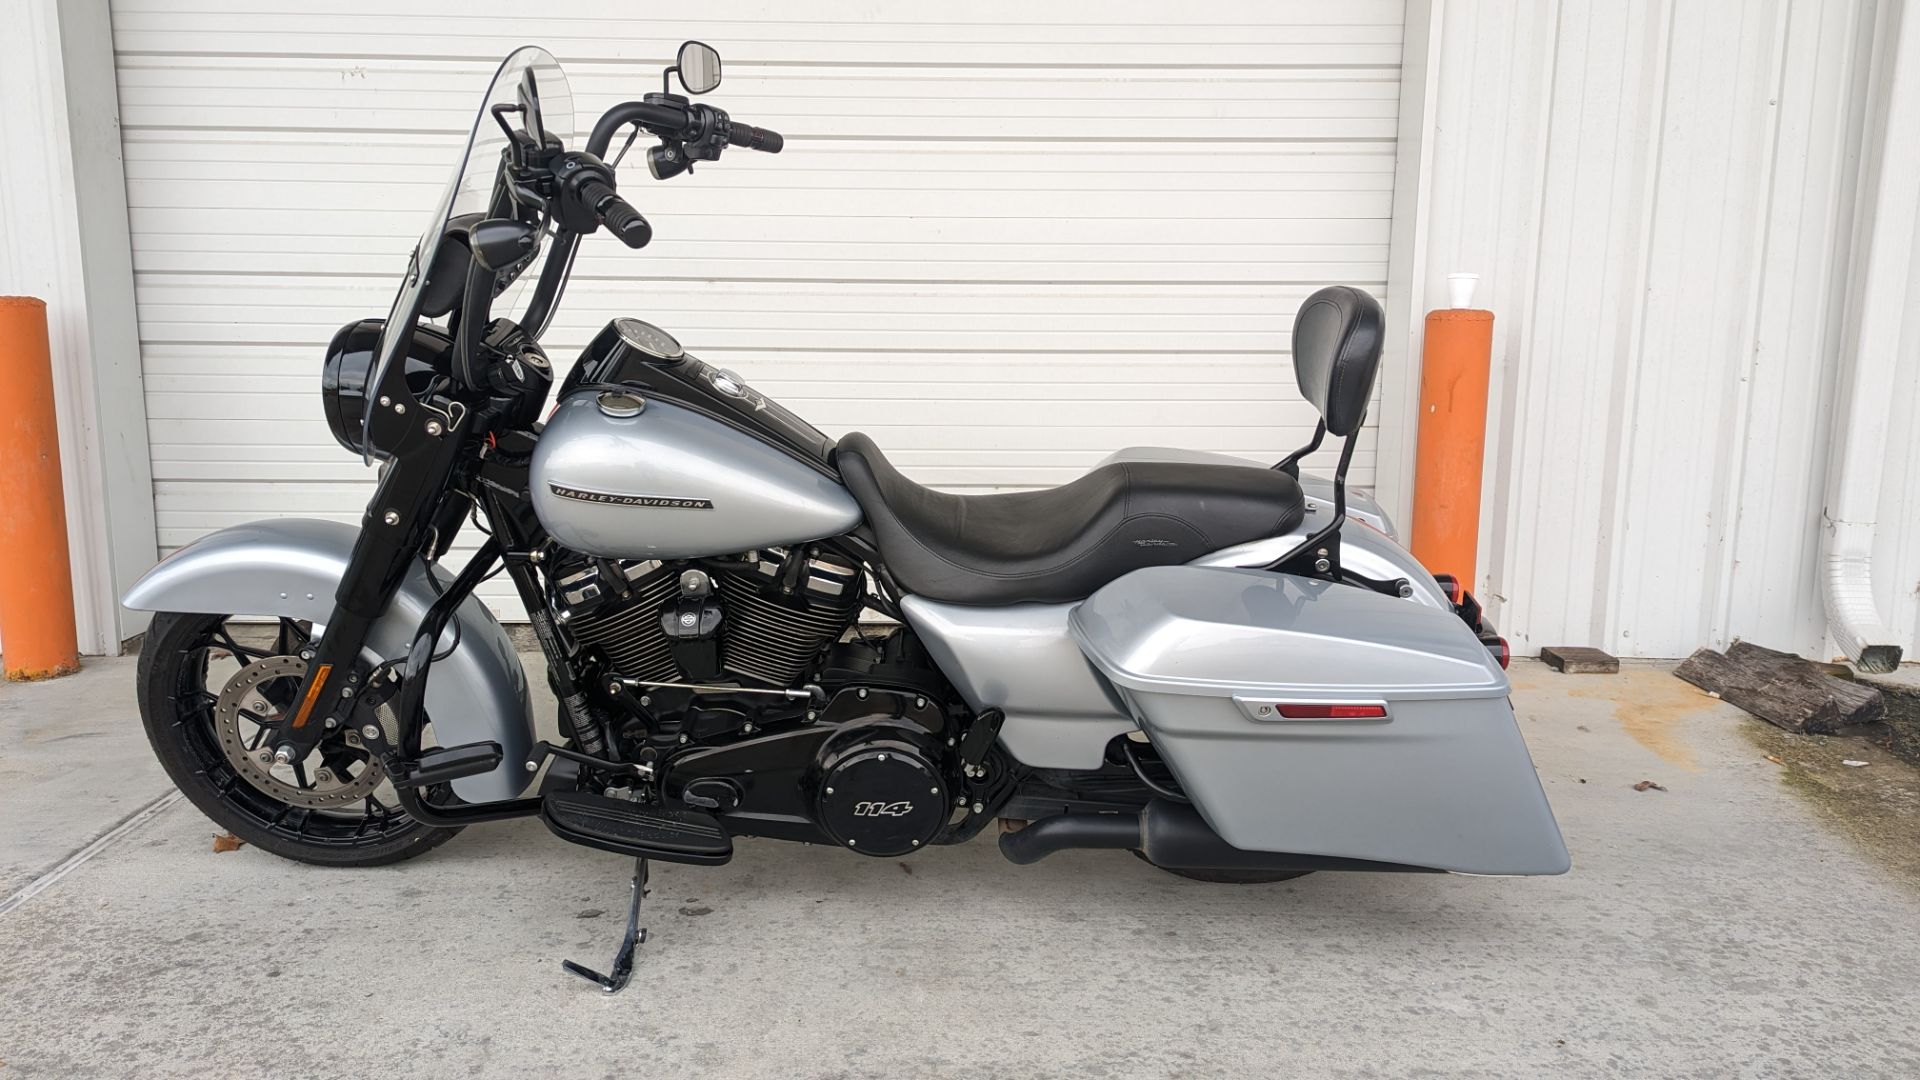 2020 Harley-Davidson Road King® Special in Monroe, Louisiana - Photo 2